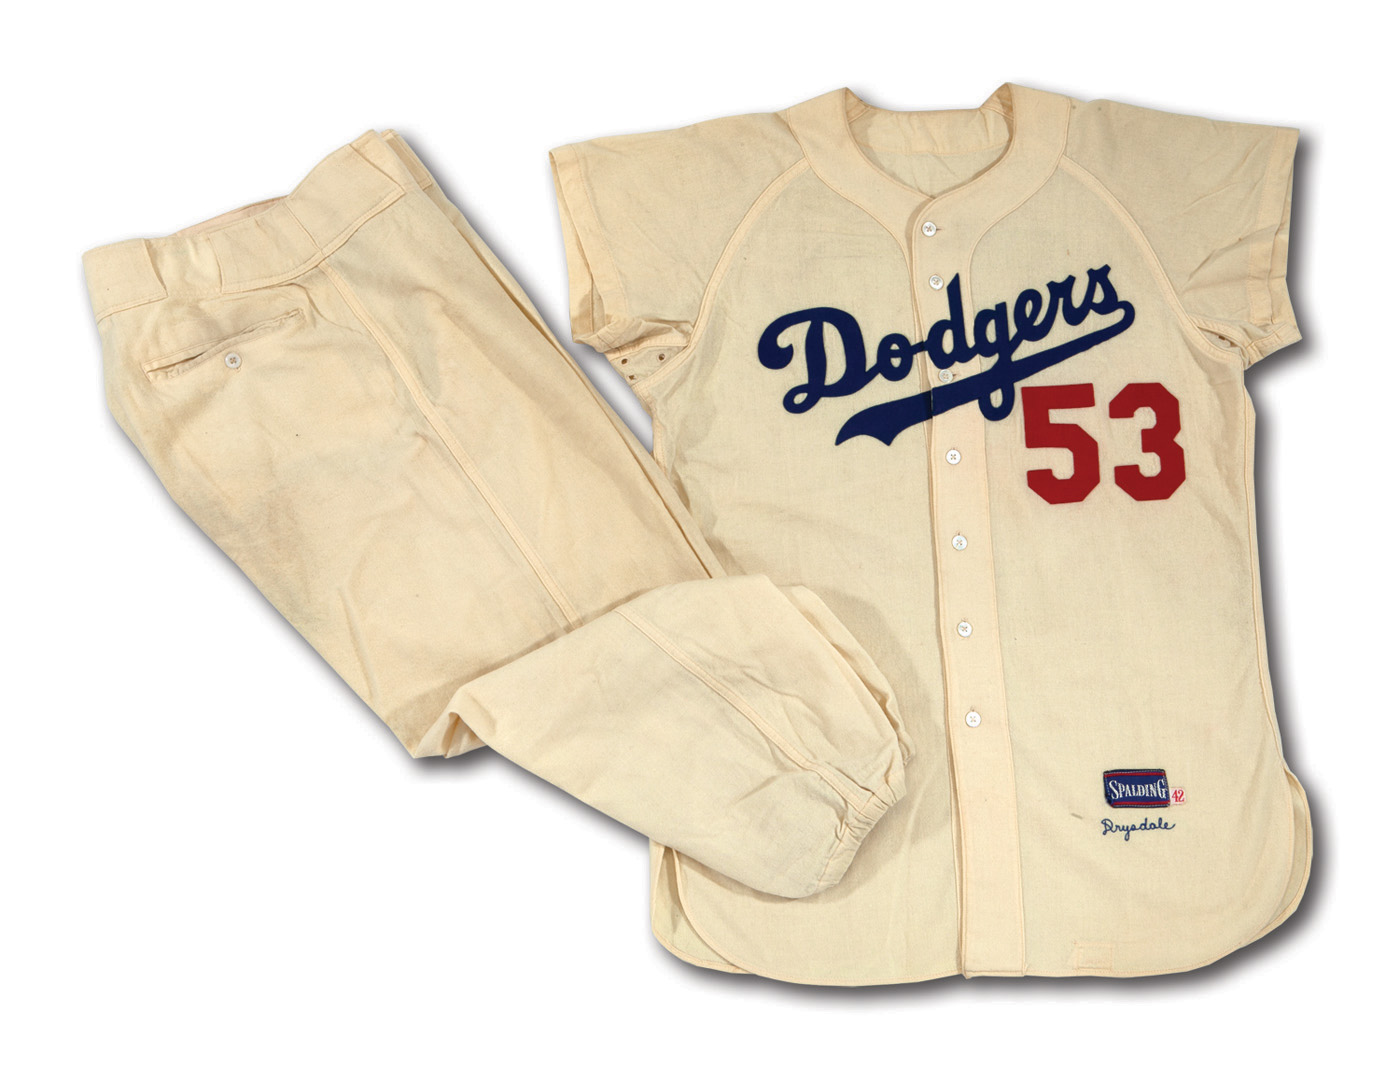 1956 Sandy Koufax Game Worn & Signed Brooklyn Dodgers Jersey